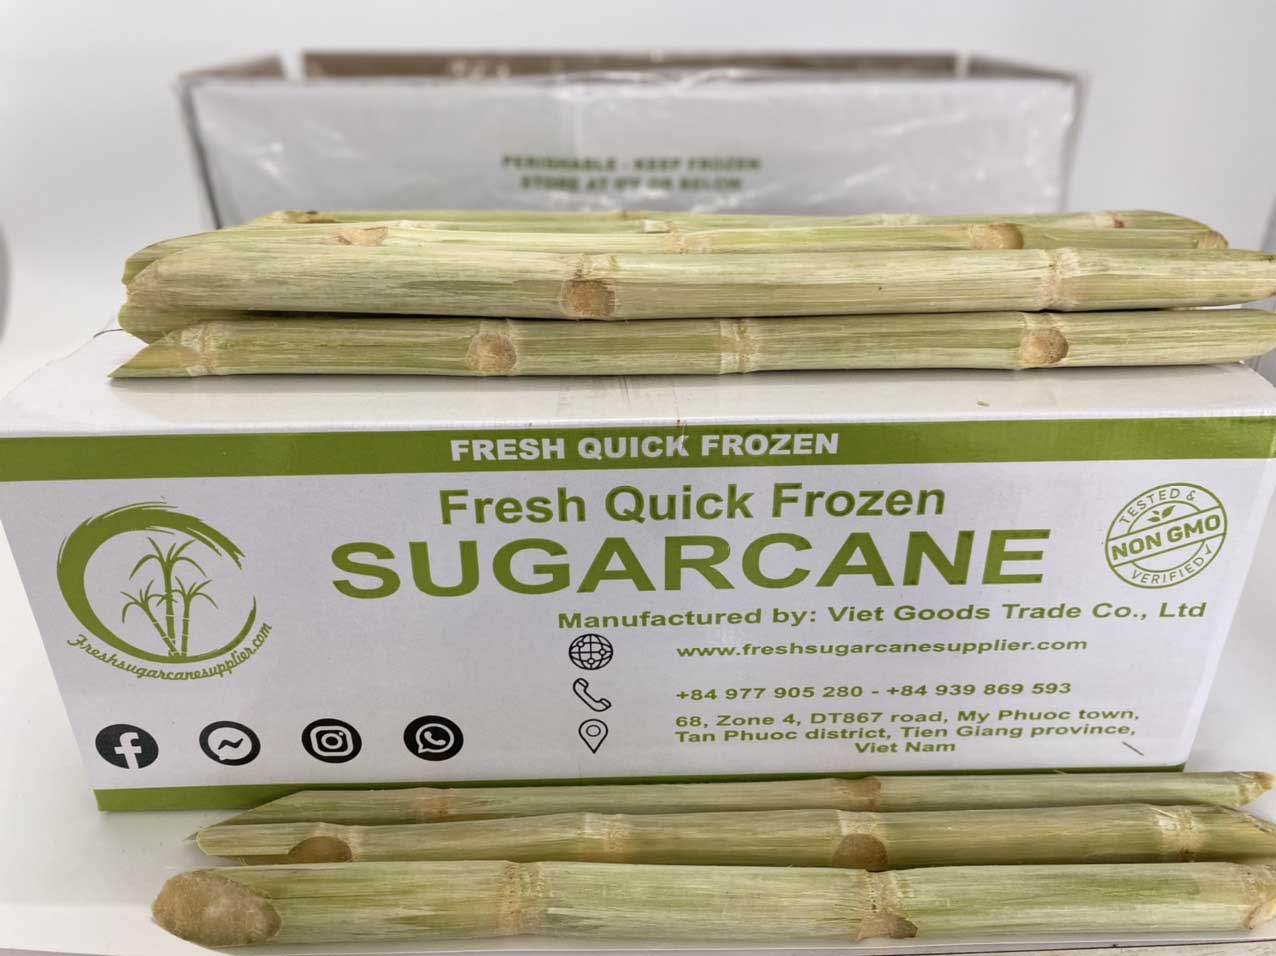 Frozen sugarcane sticks bud removed